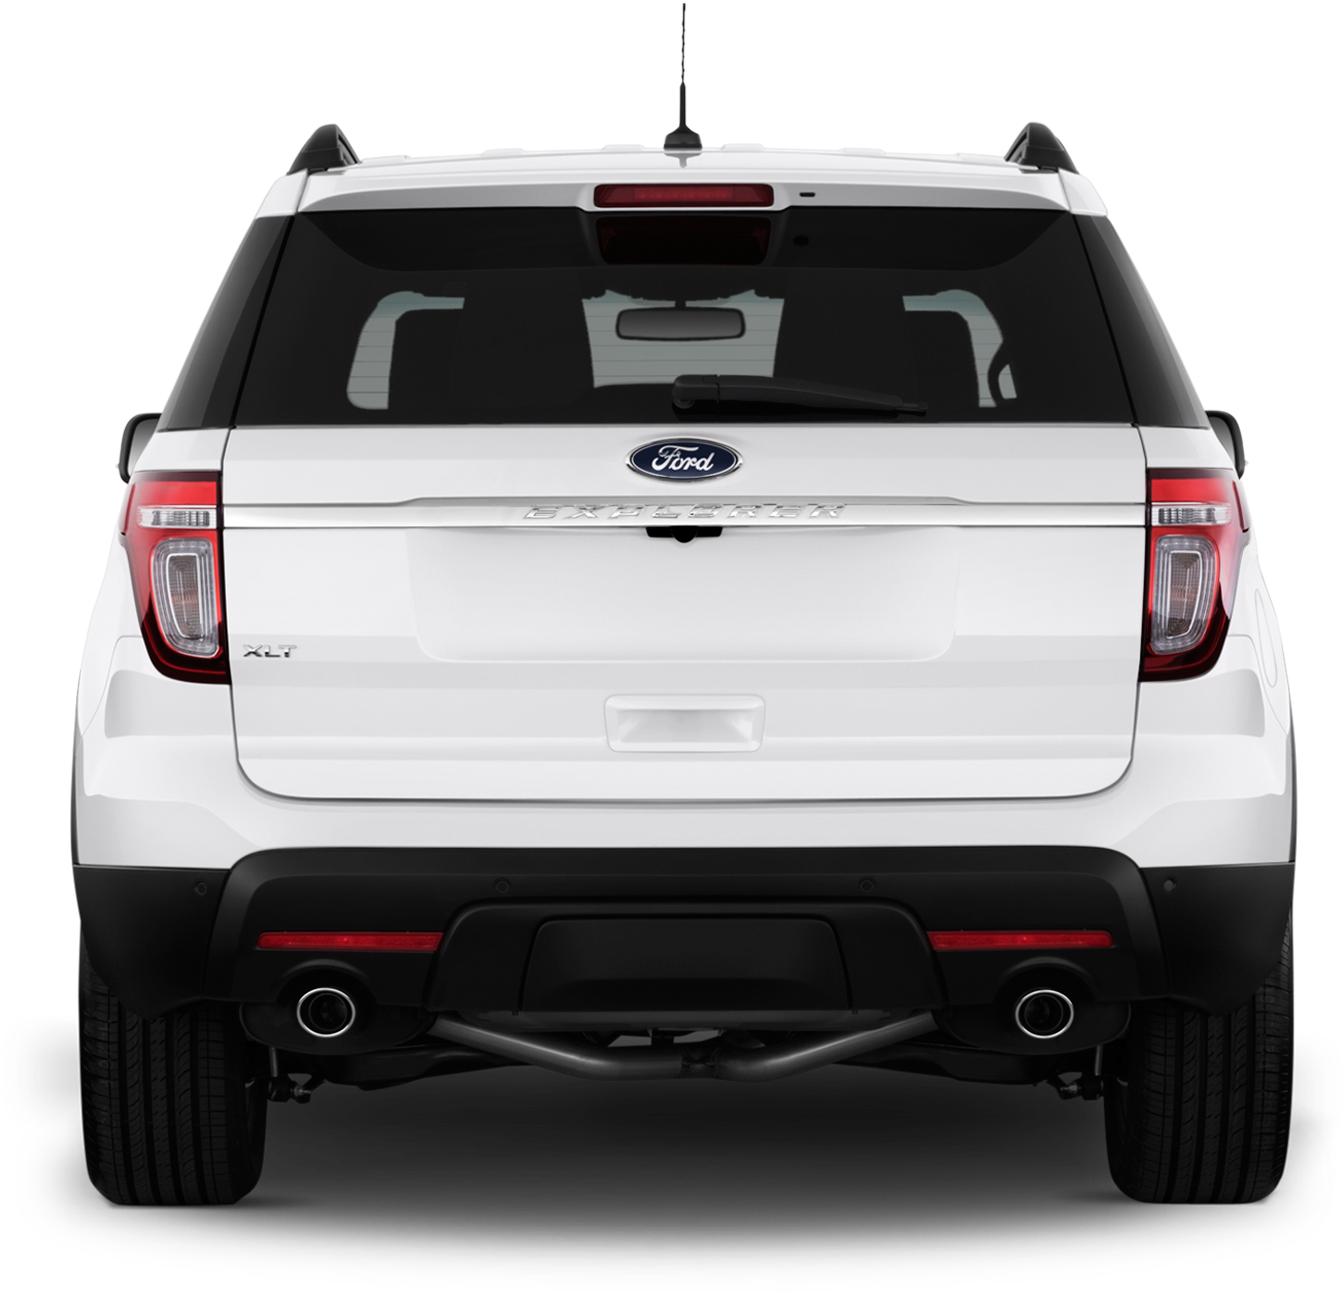 Ford Explorer Png Download - 2015 Ford Explorer Rear (2048x1360), Png Download